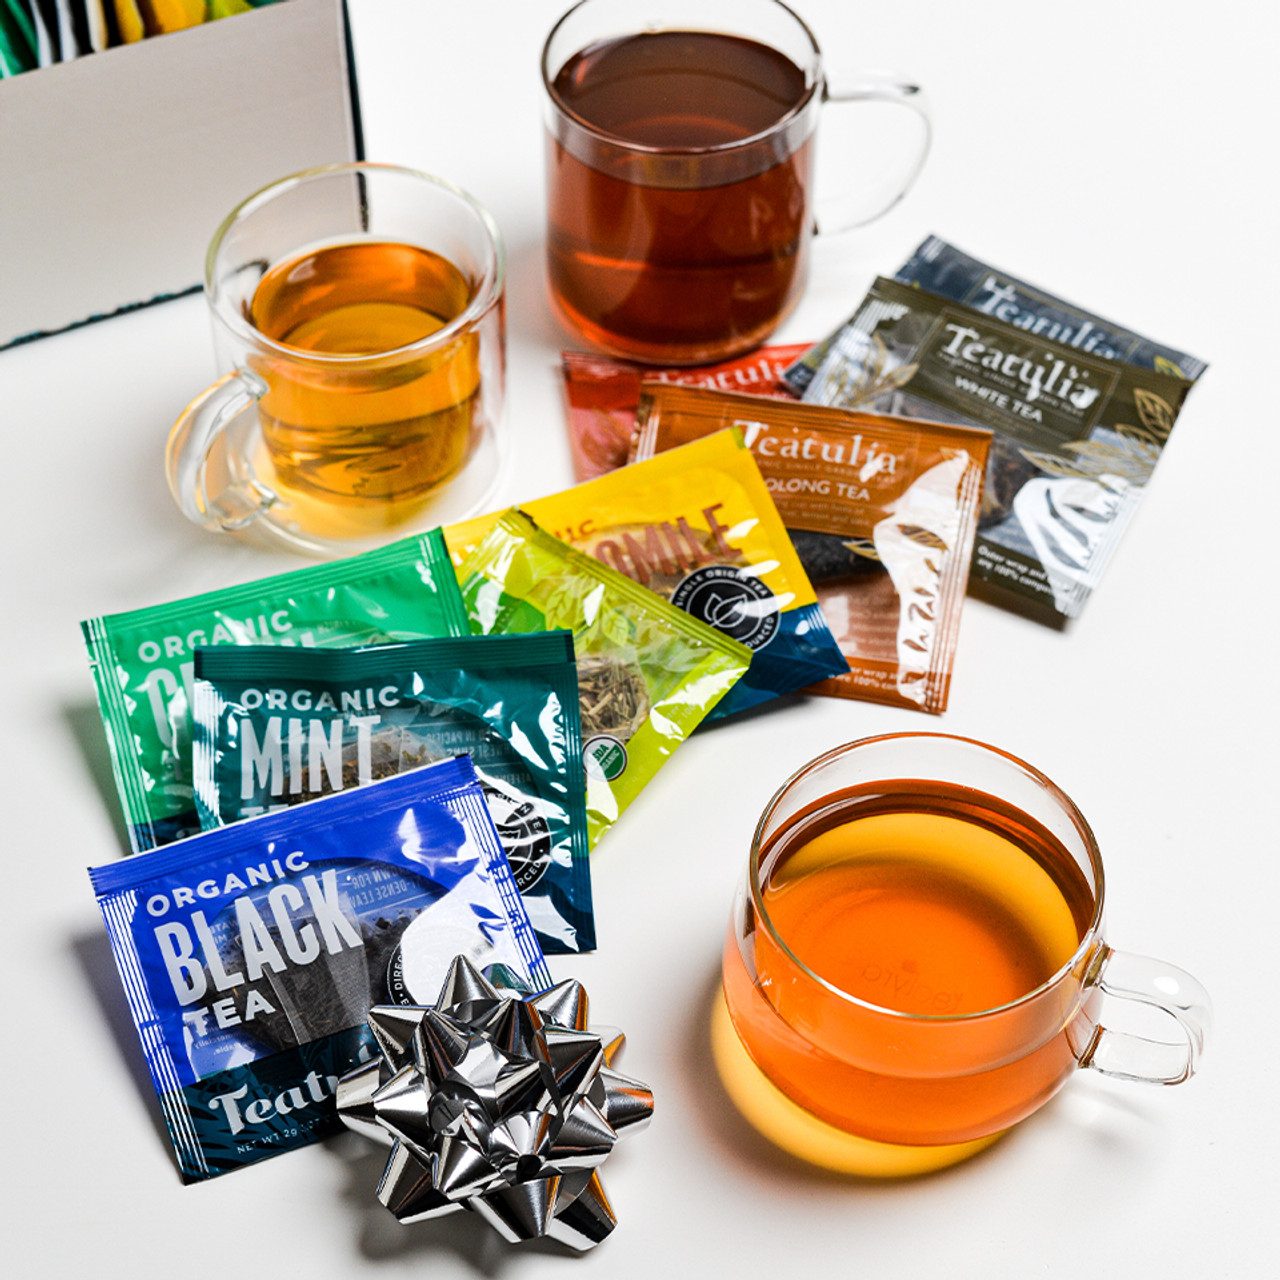 Tea Gift Sets for Tea Lovers, Tea Samplers